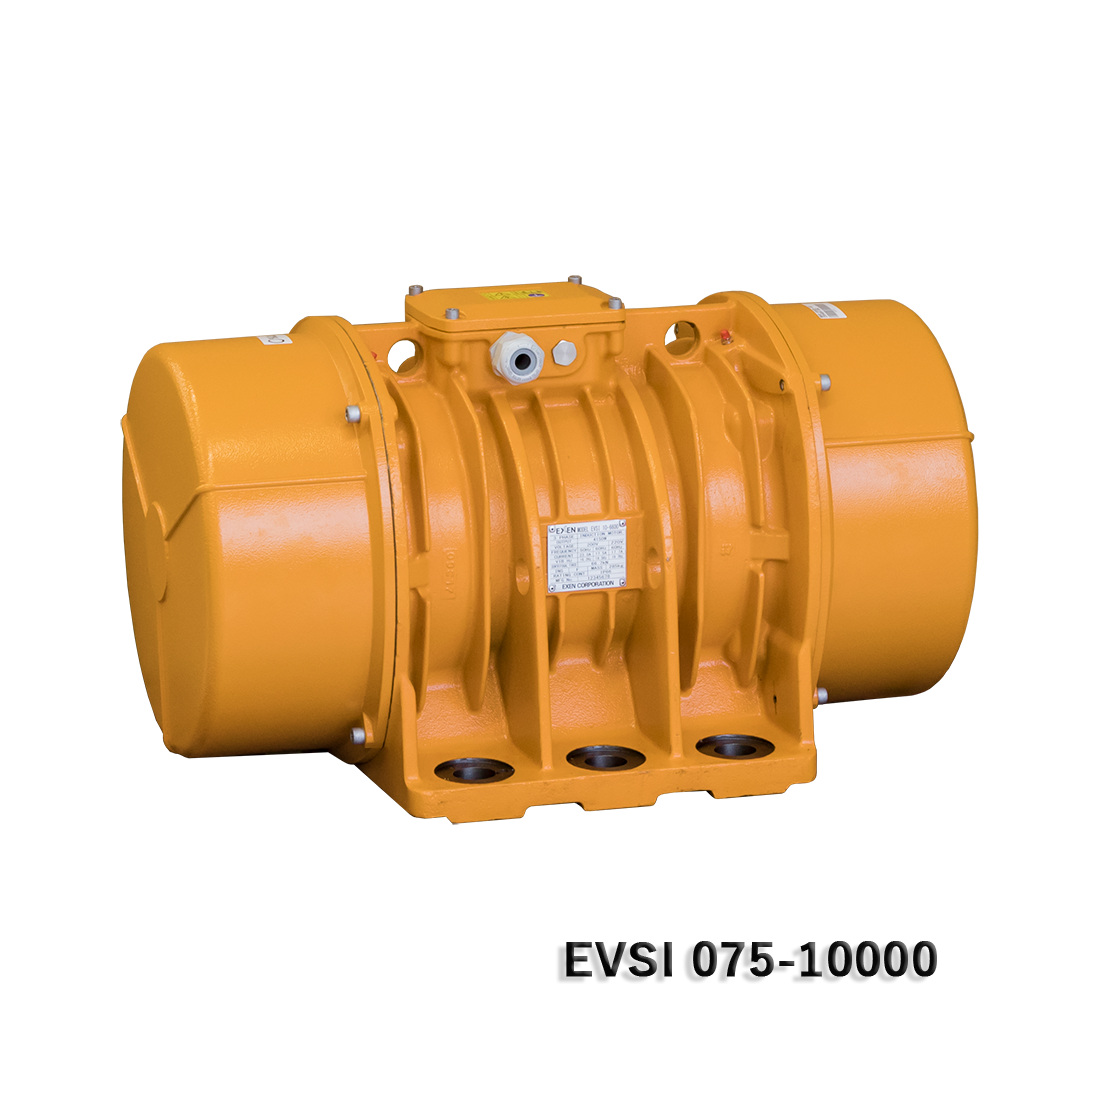 Vibration motor EVSI ･ EVUR 075 series (8-pole 3-phase 200 -440V)